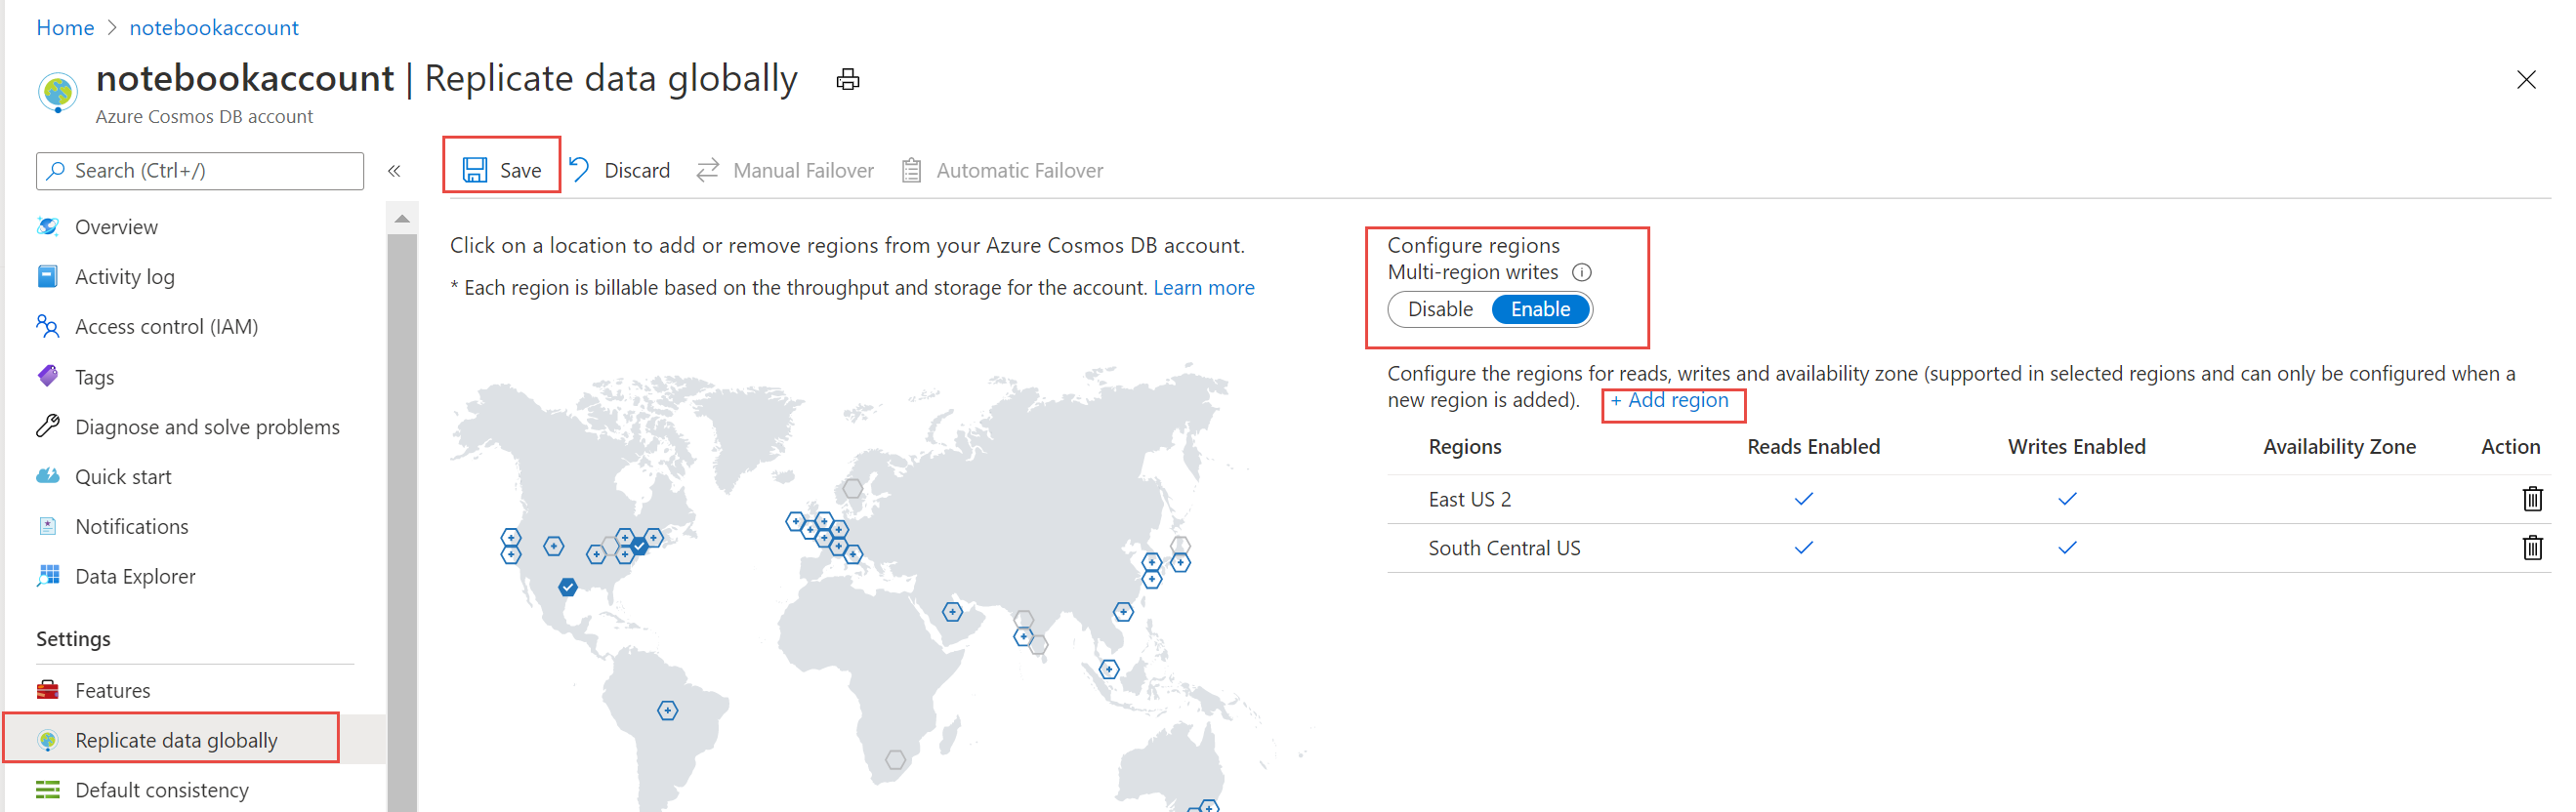 Screenshot to enable multi-region writes using Azure portal.